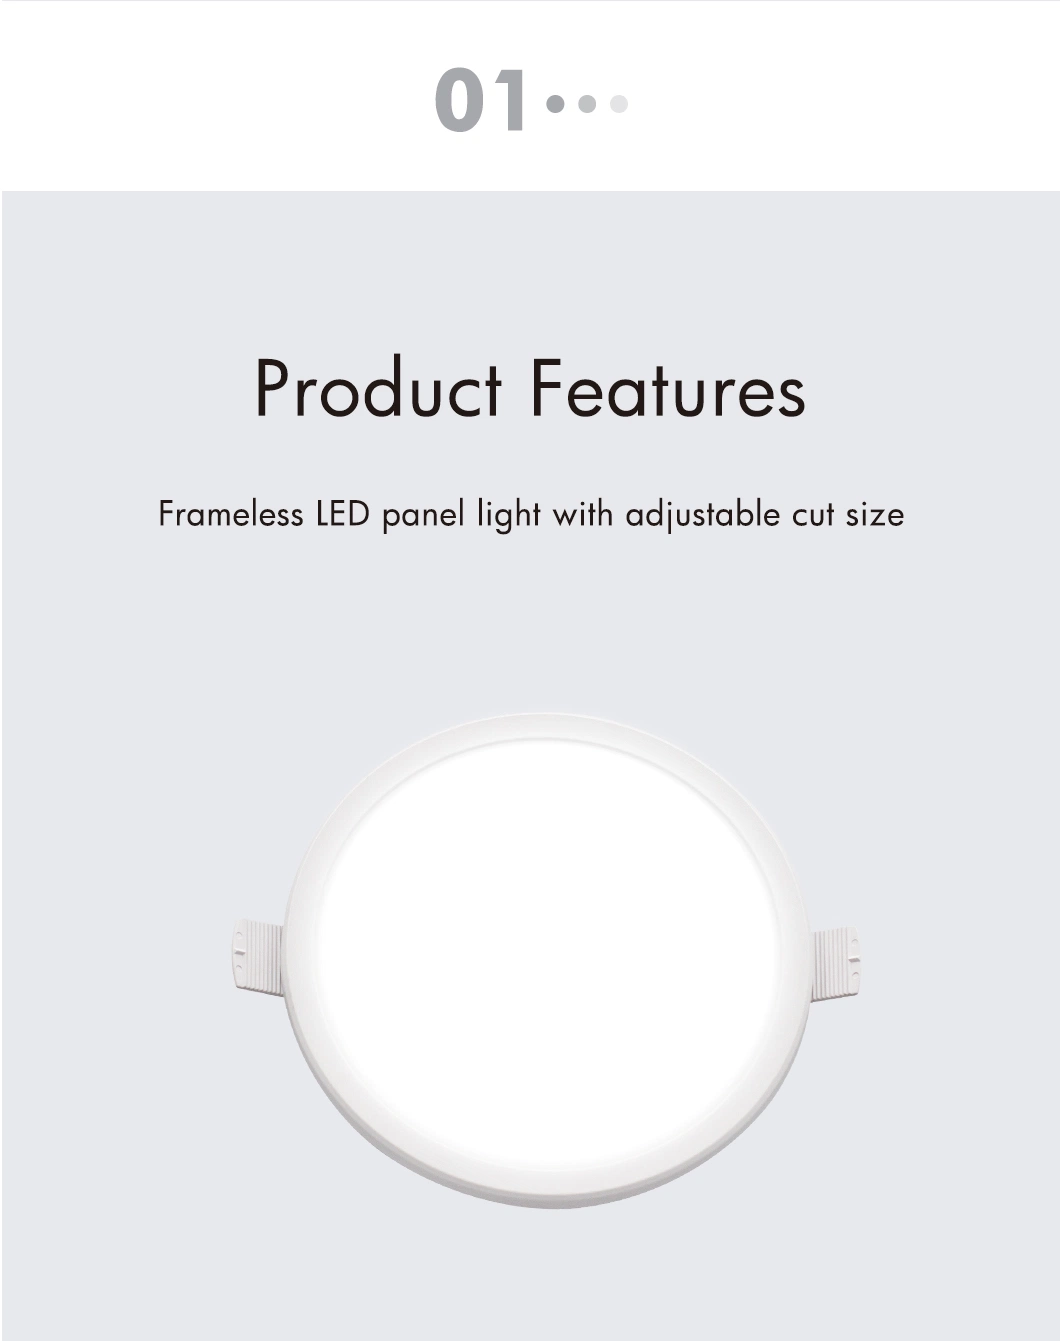 Frameless Recessed Round LED Panel Light Manufactures Luminous White Lamp Lighting Office